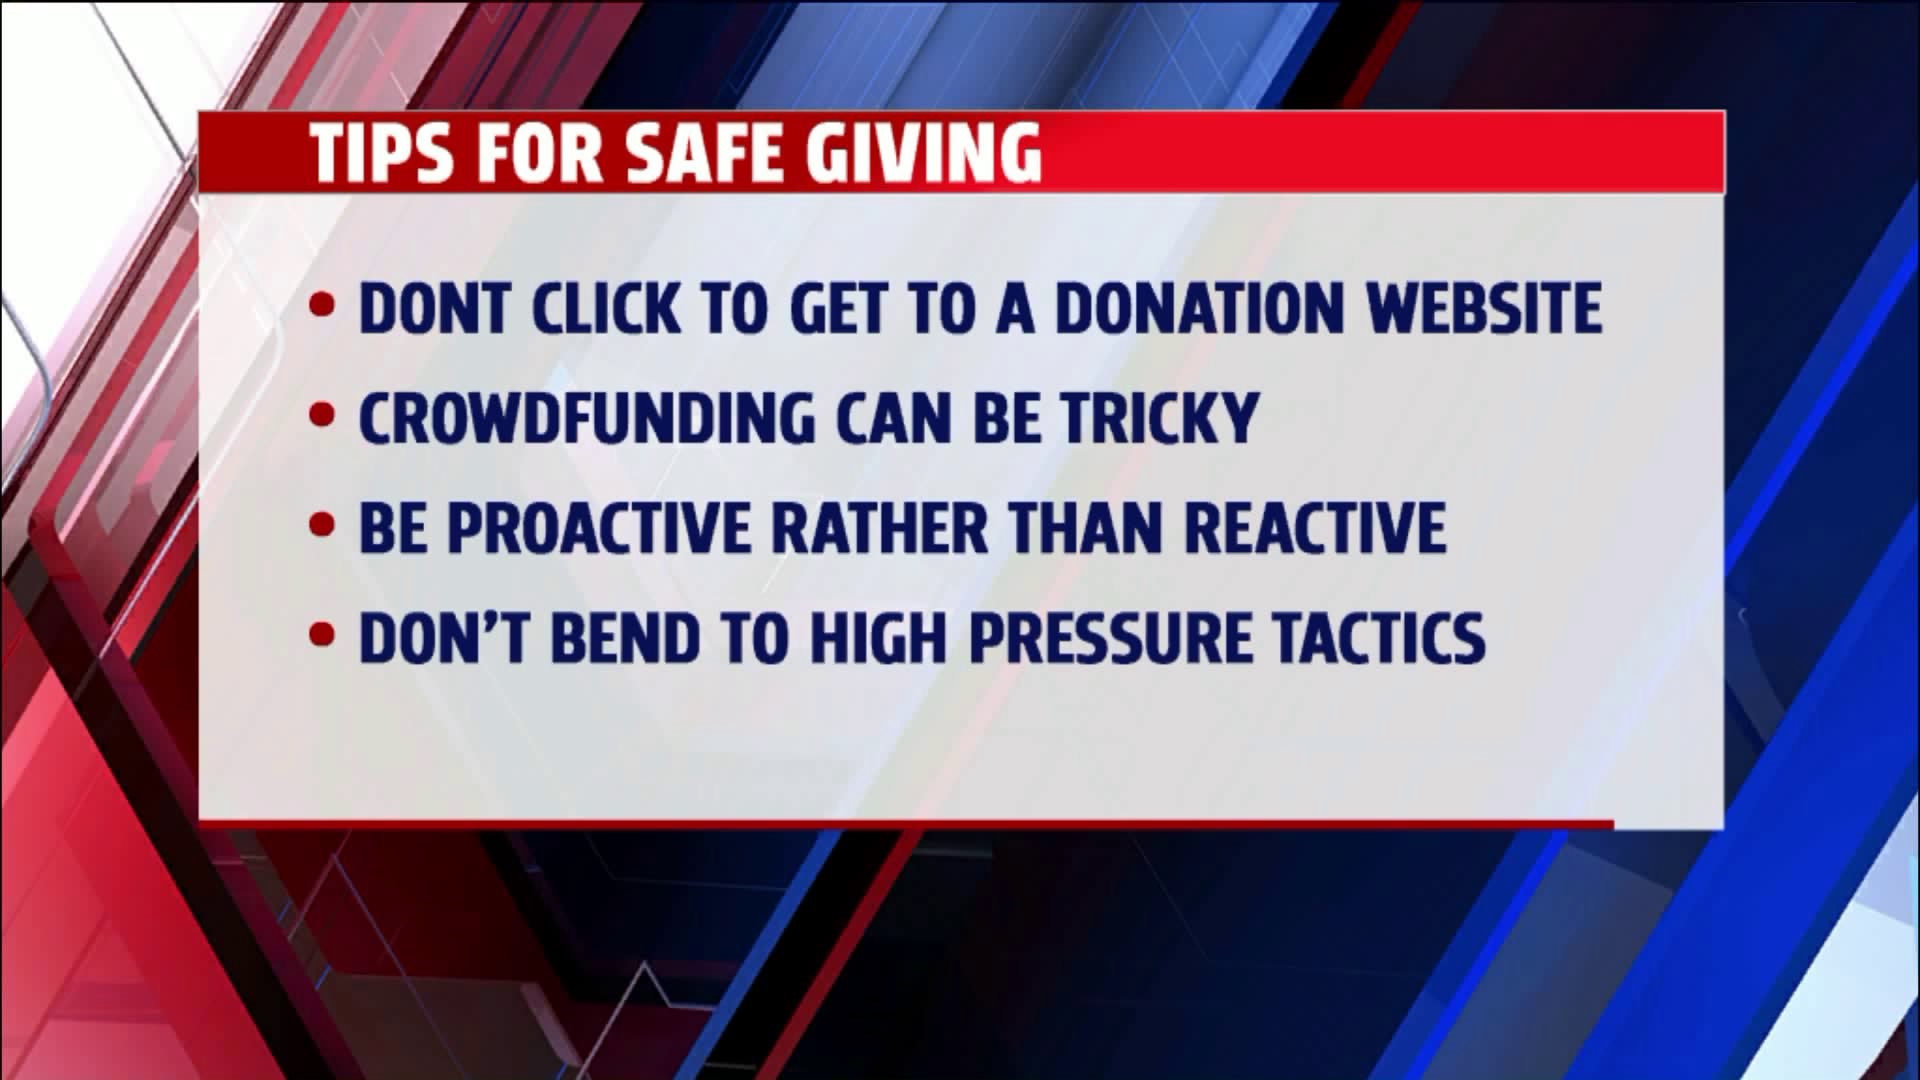 Tips for safe giving